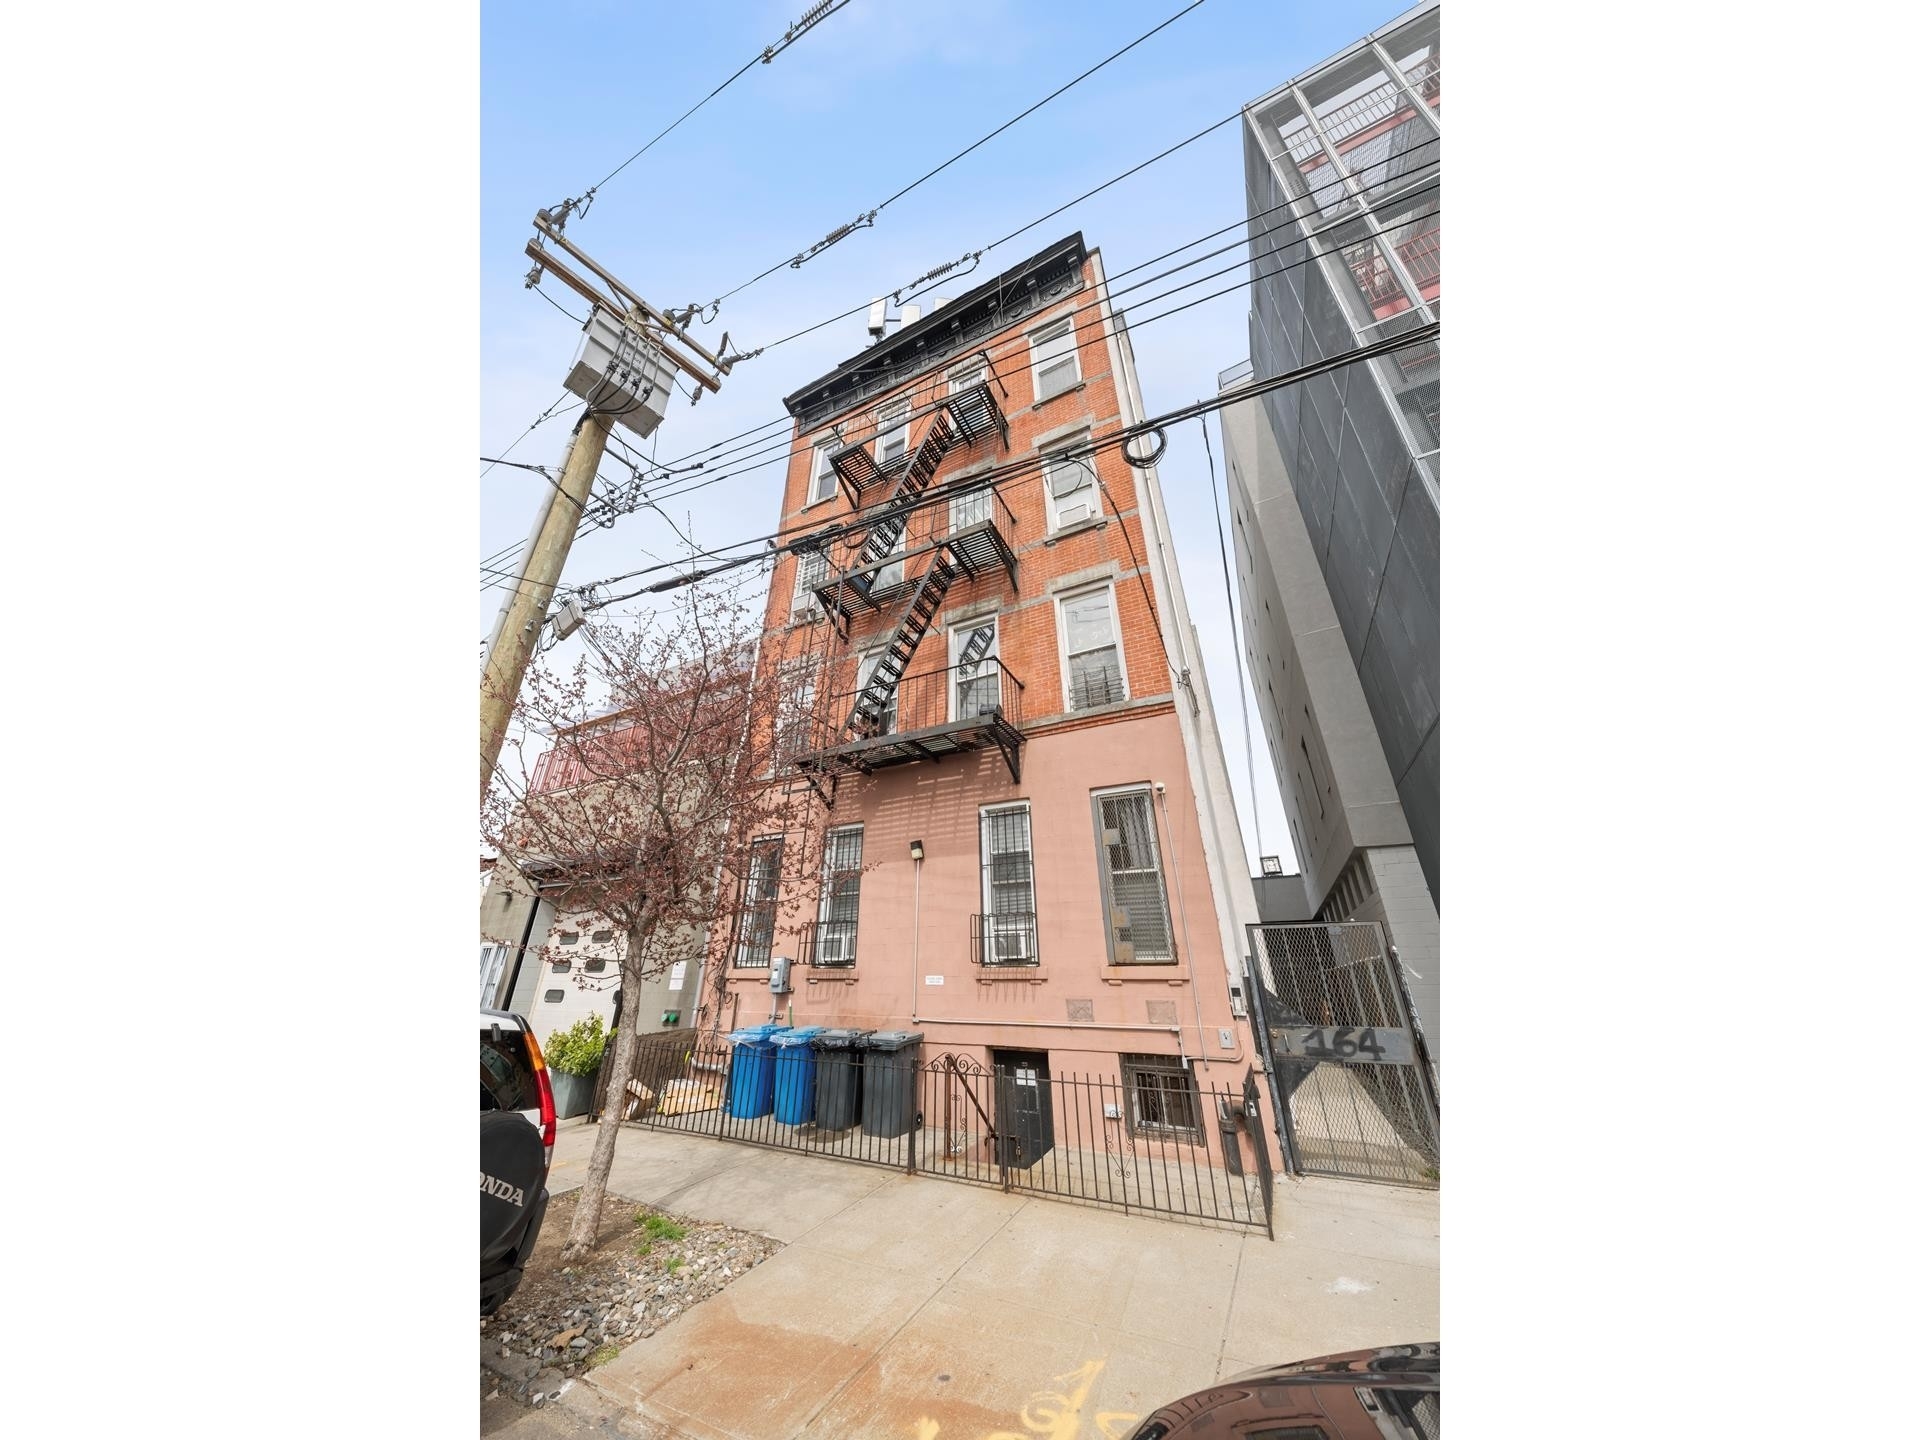 Property at 164 DIKEMAN ST, TOWNHOUSE Red Hook, Brooklyn, New York 11231